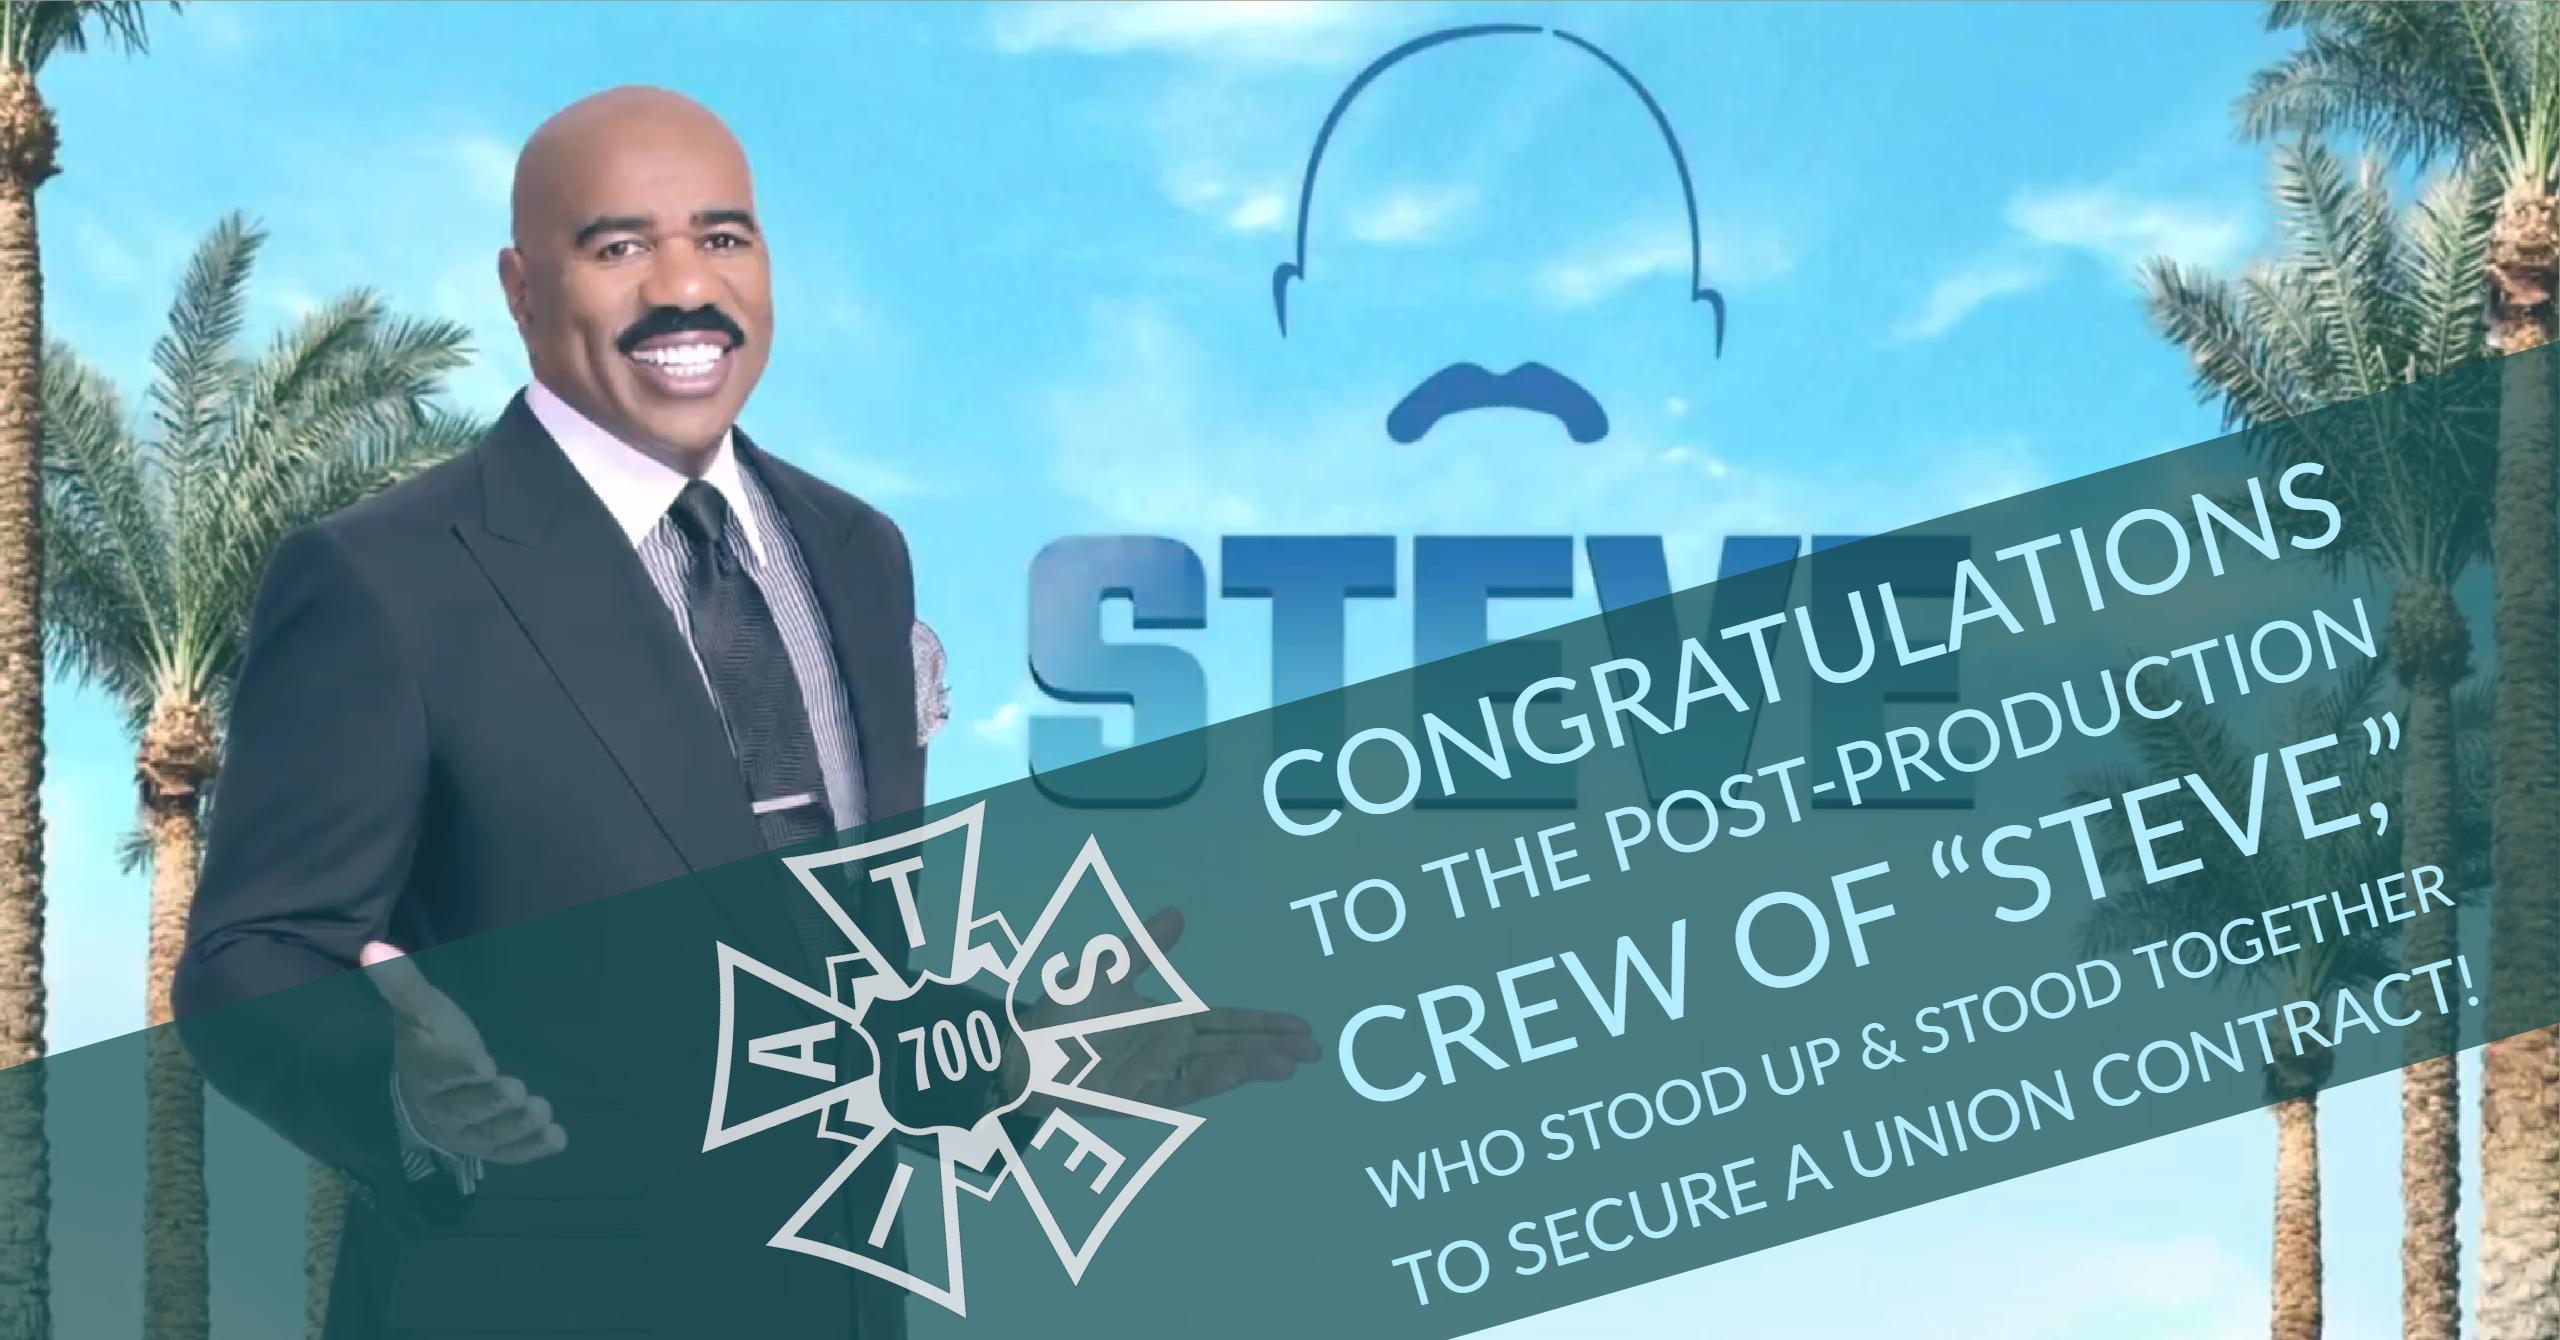 “Steve” Post Crew Wins Union Contract!